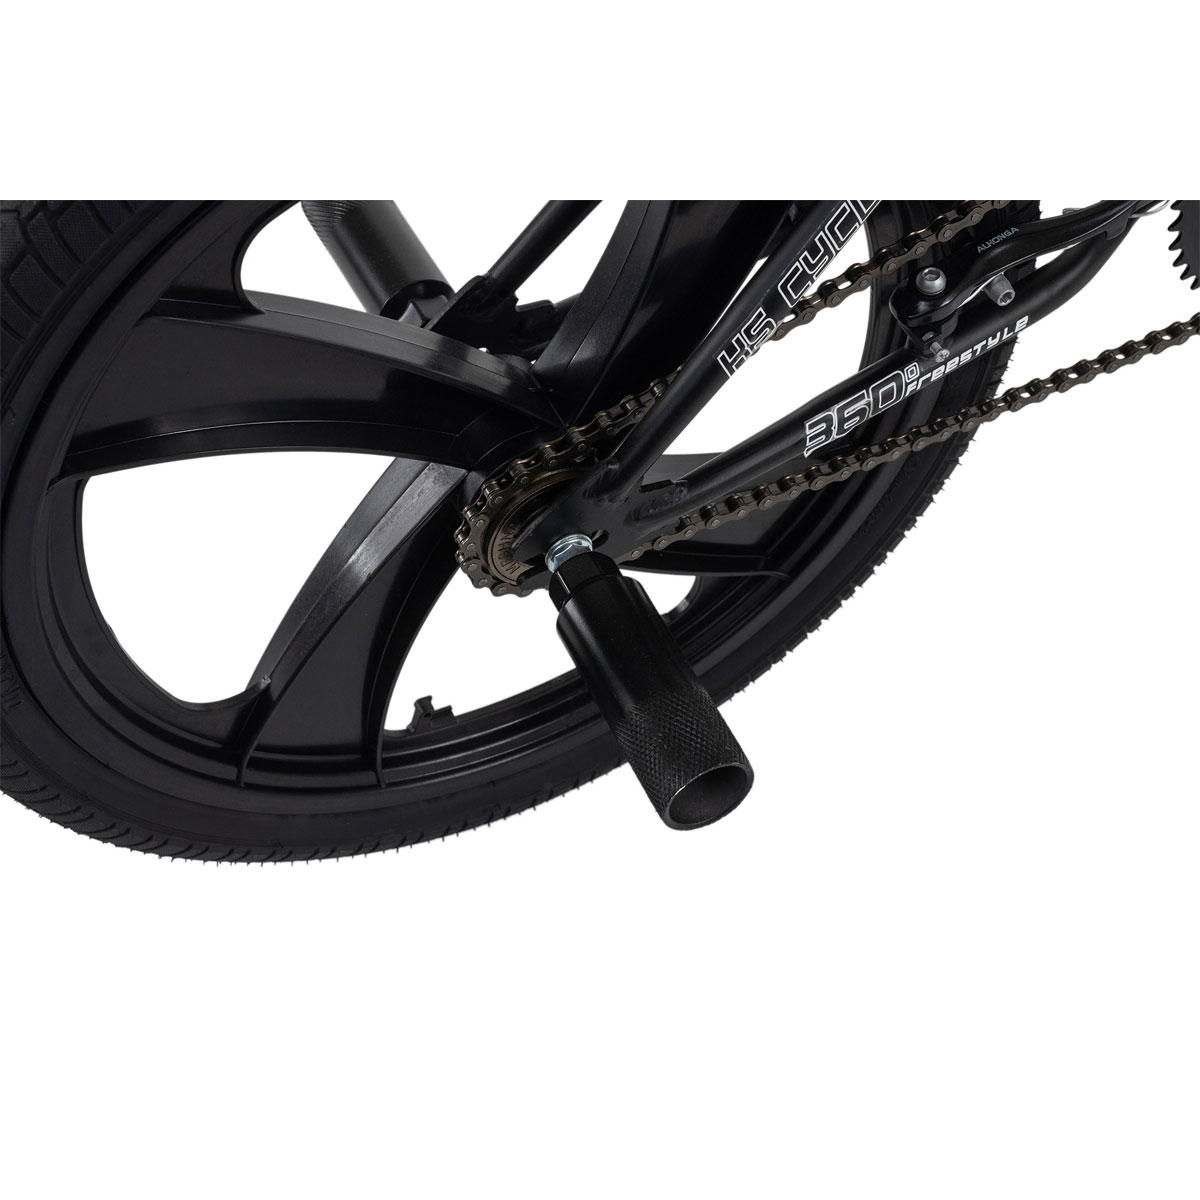 BMX-Rad „Daemon“, schwarz